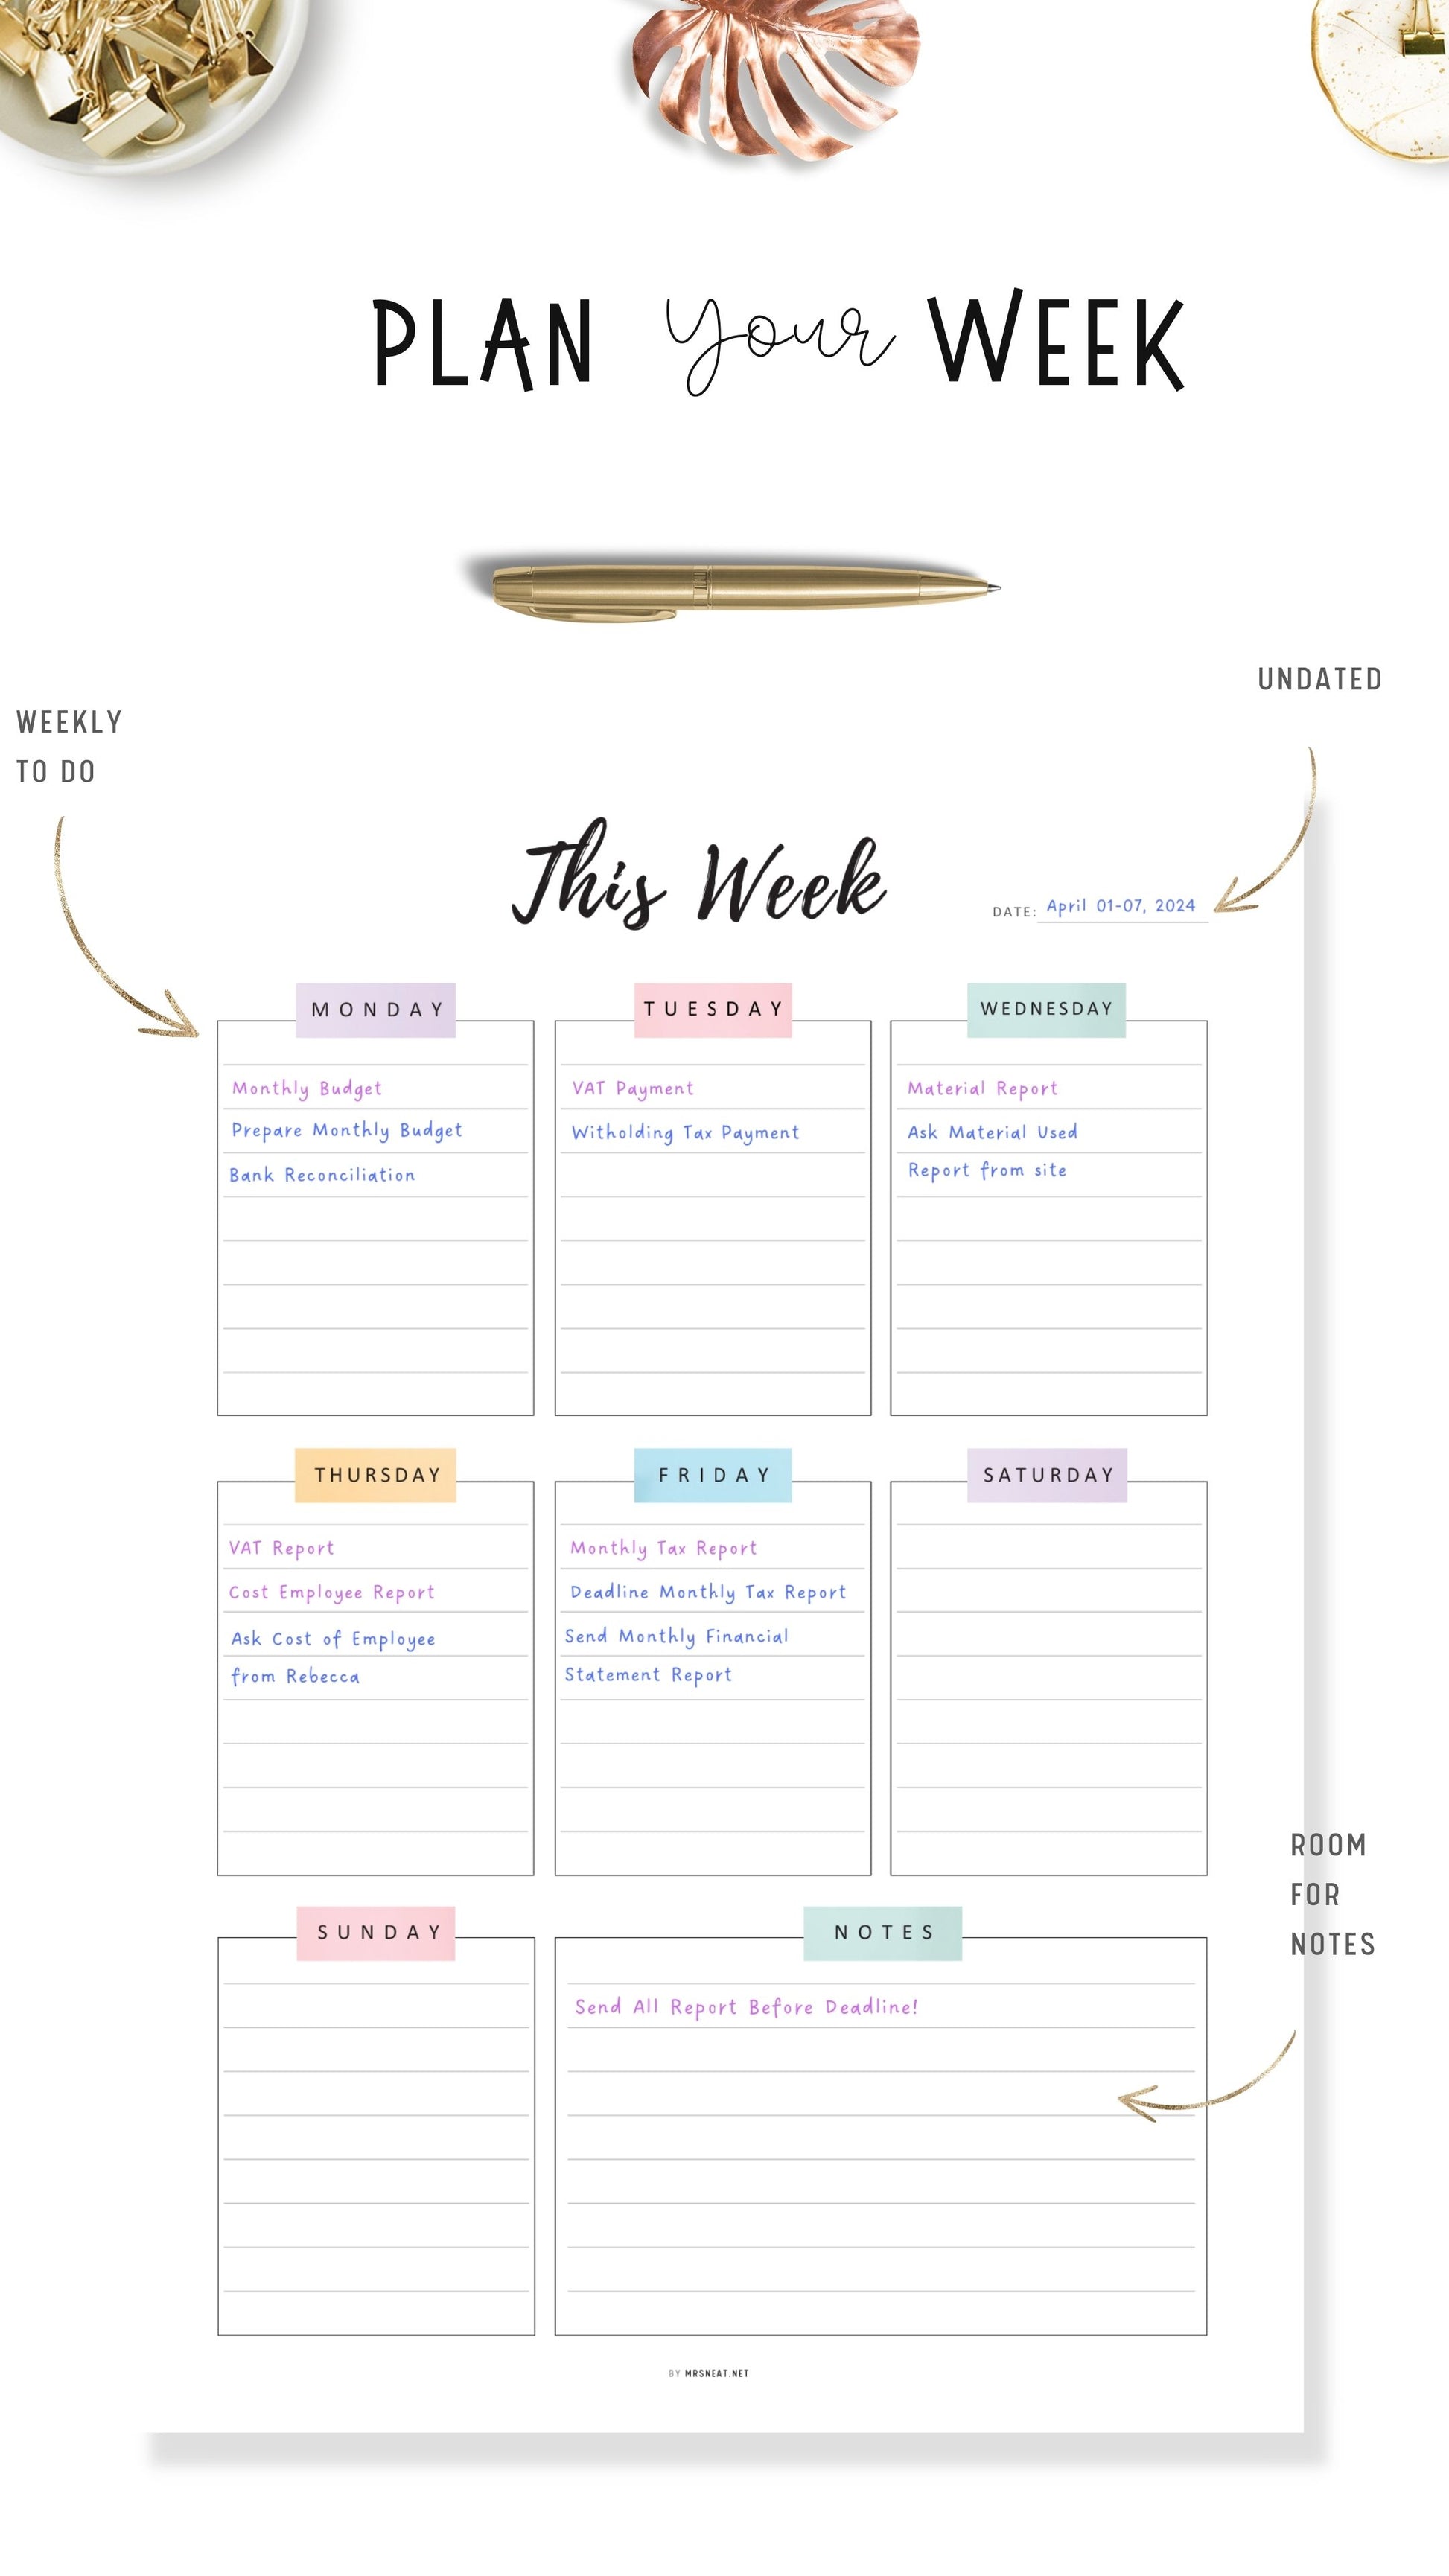 Lined Weekly Planner Template Printable